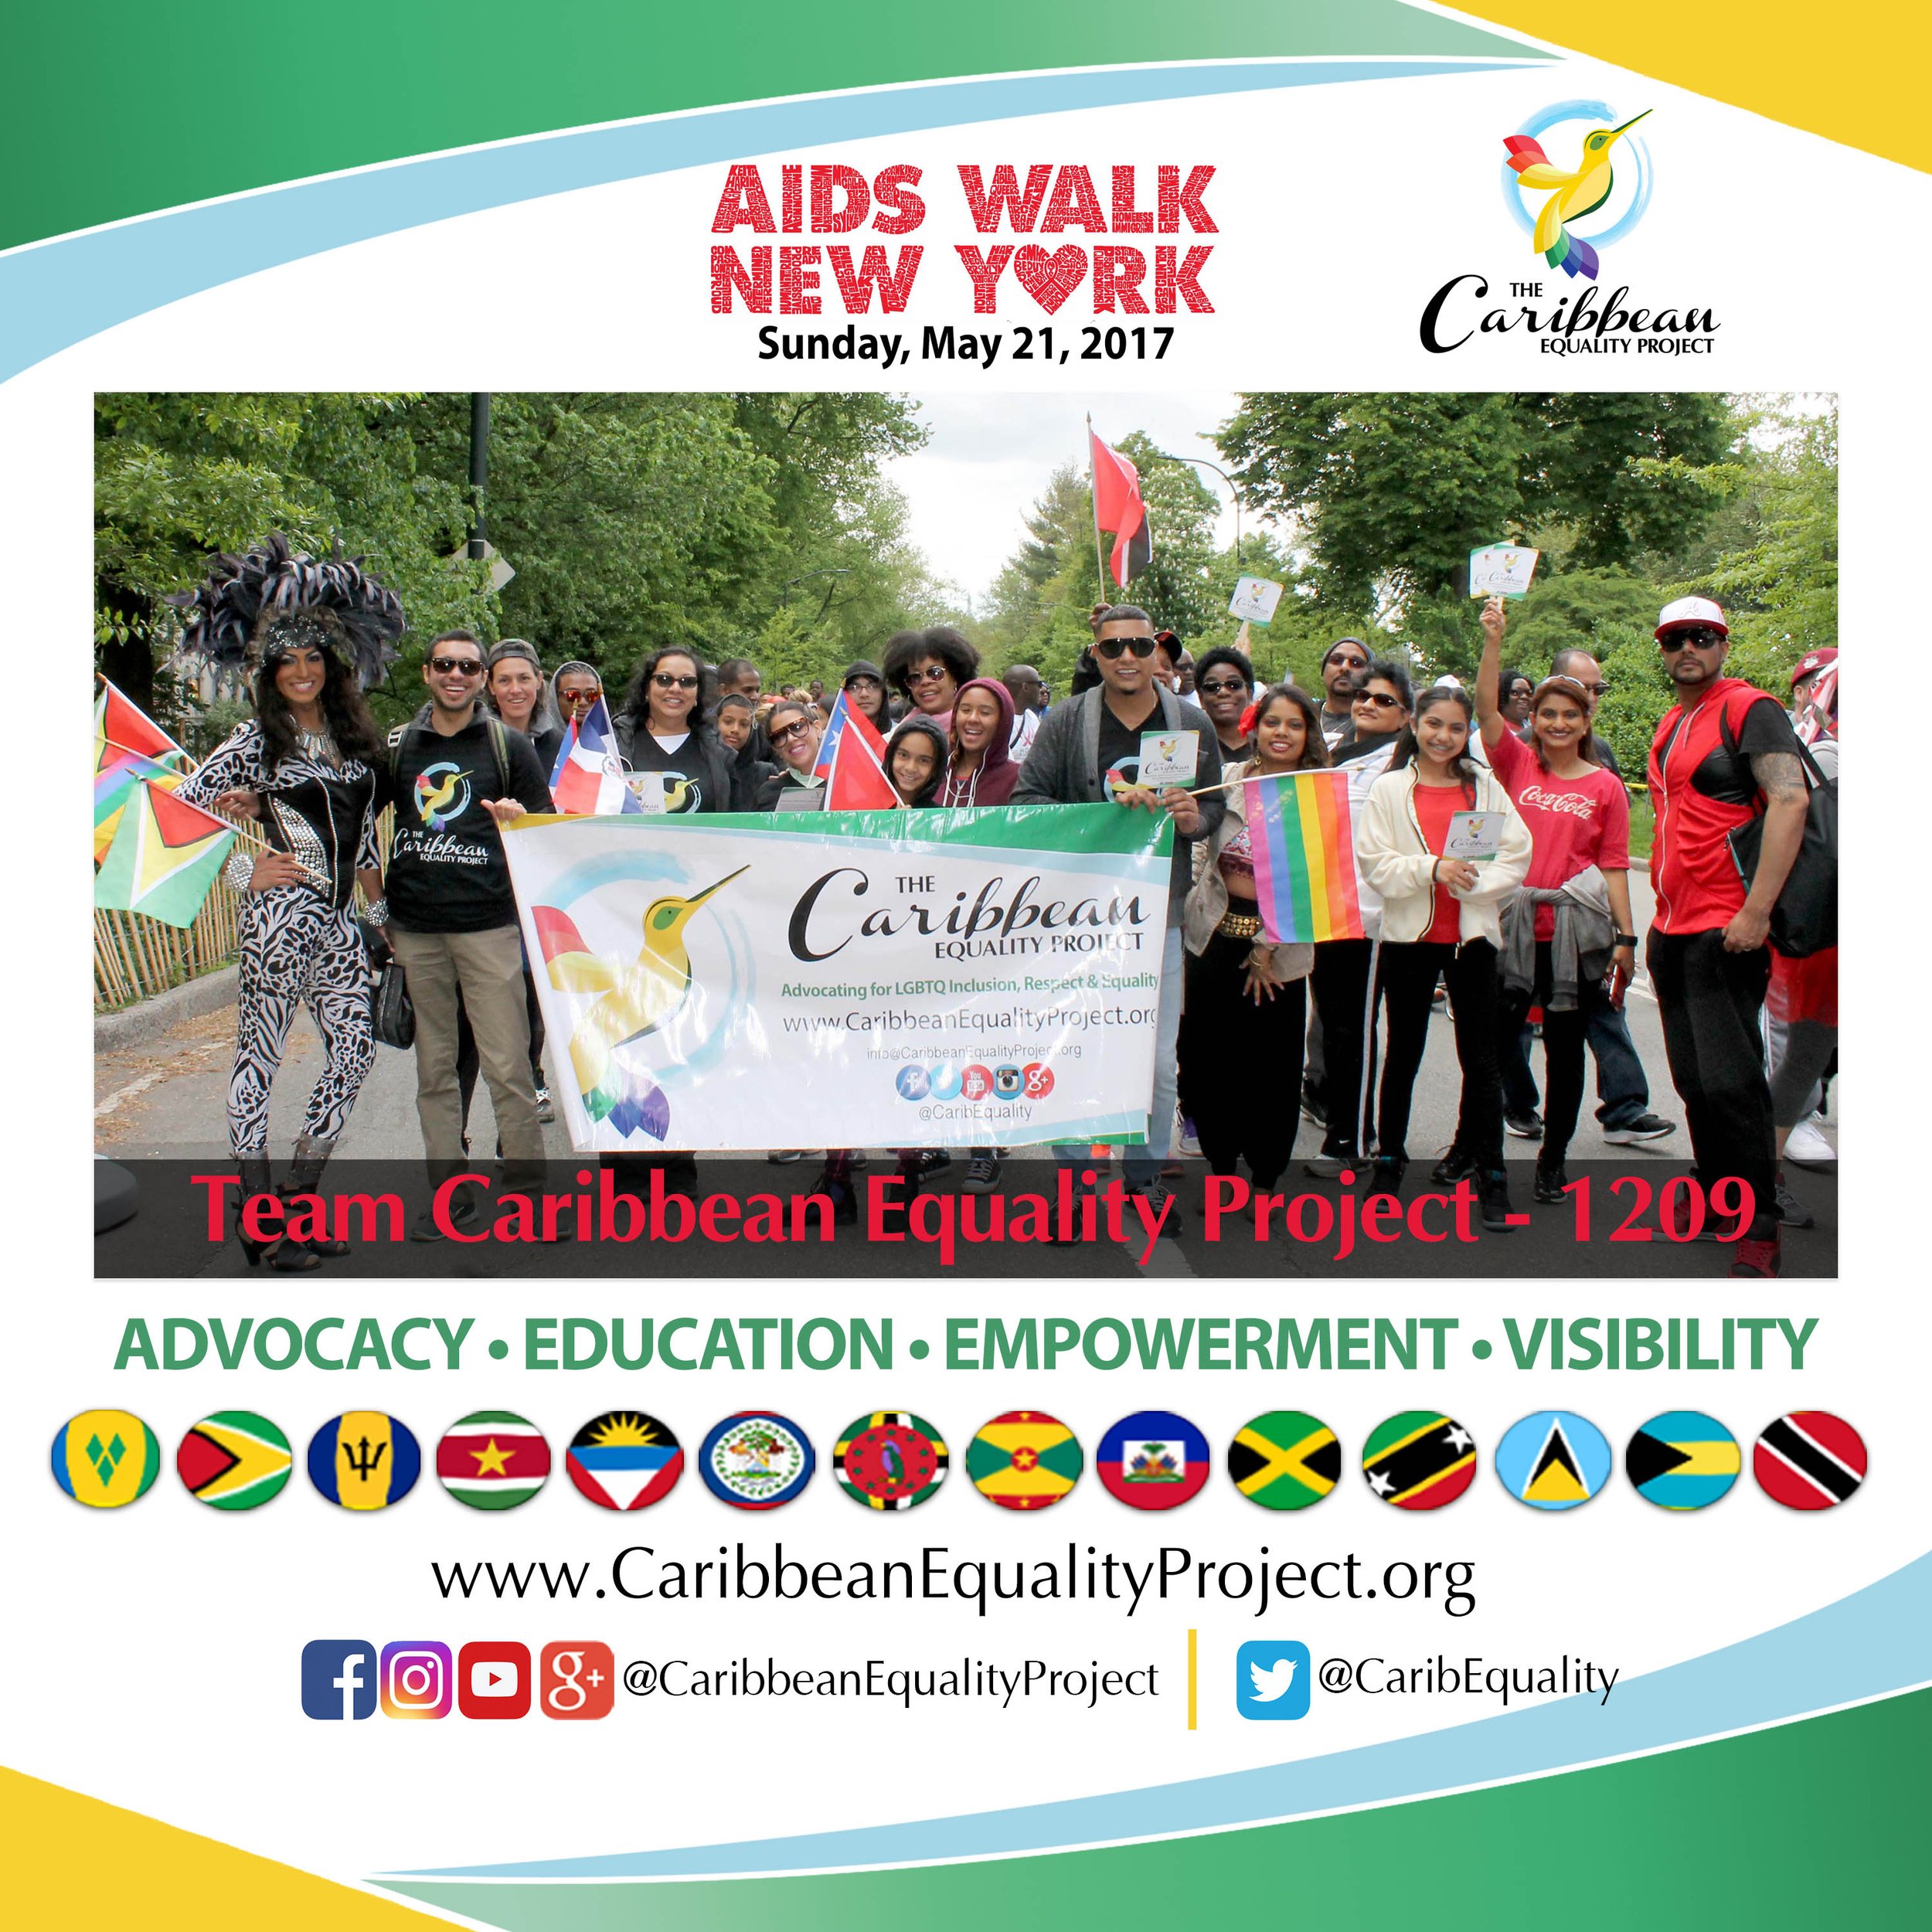 2017 CEP AIDS Walk NY - Poster.jpg